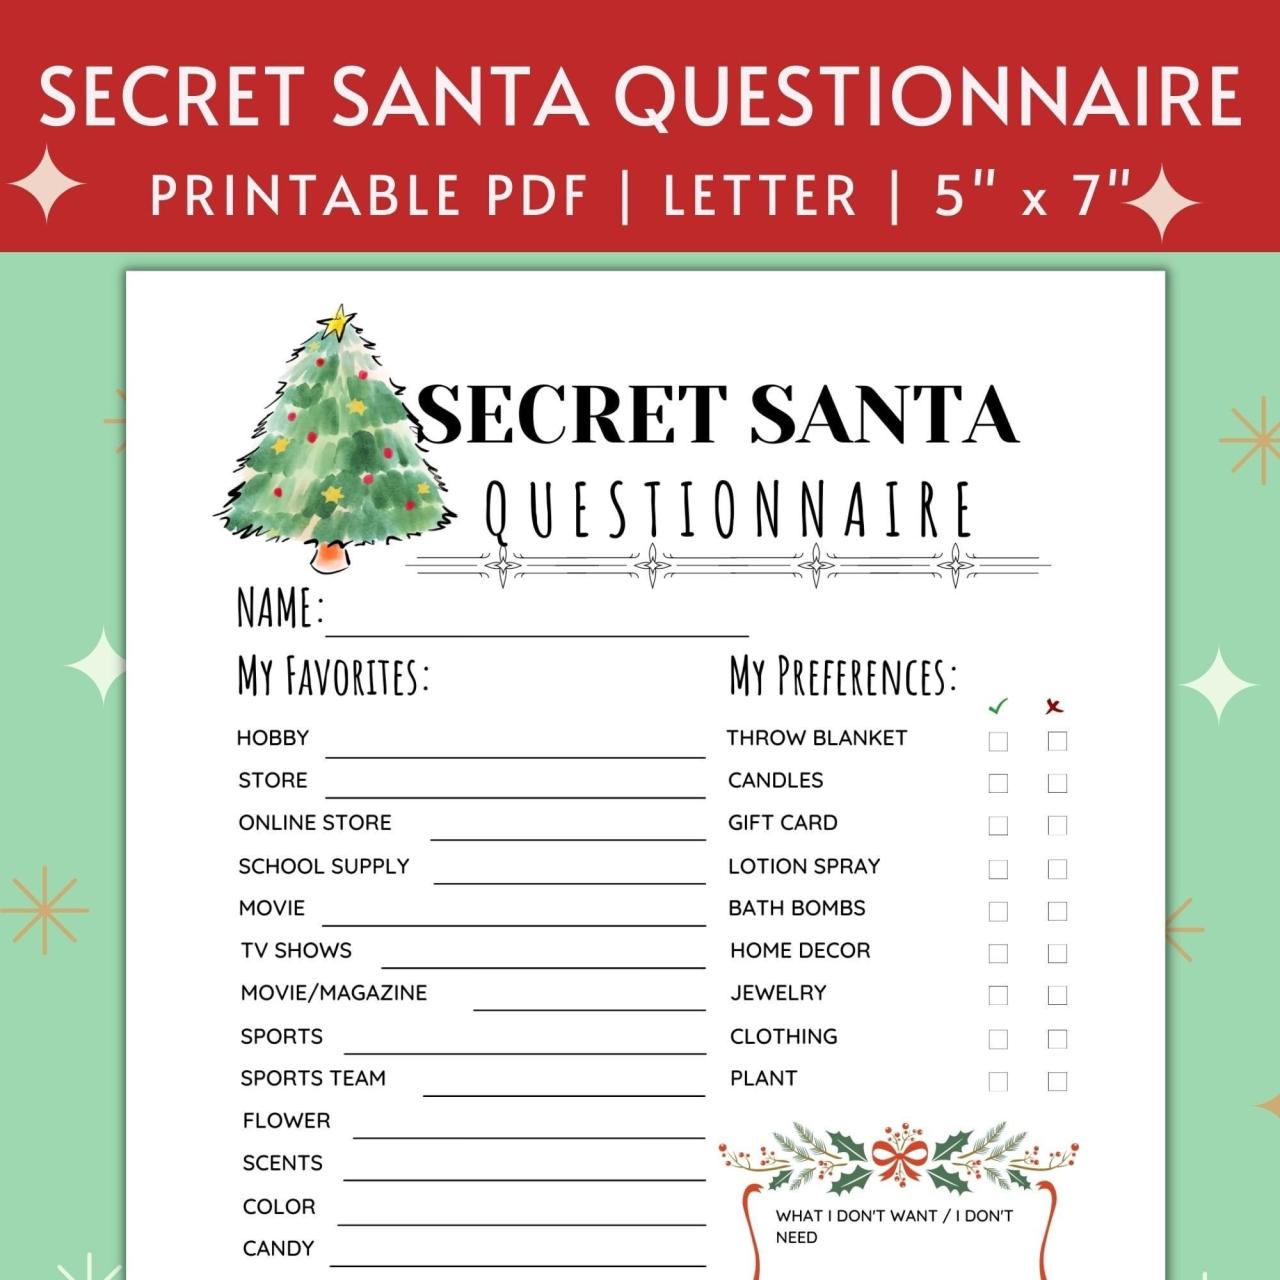 Printable Secret Santa Questionnaire For Christmas Gift - Etsy New Zealand